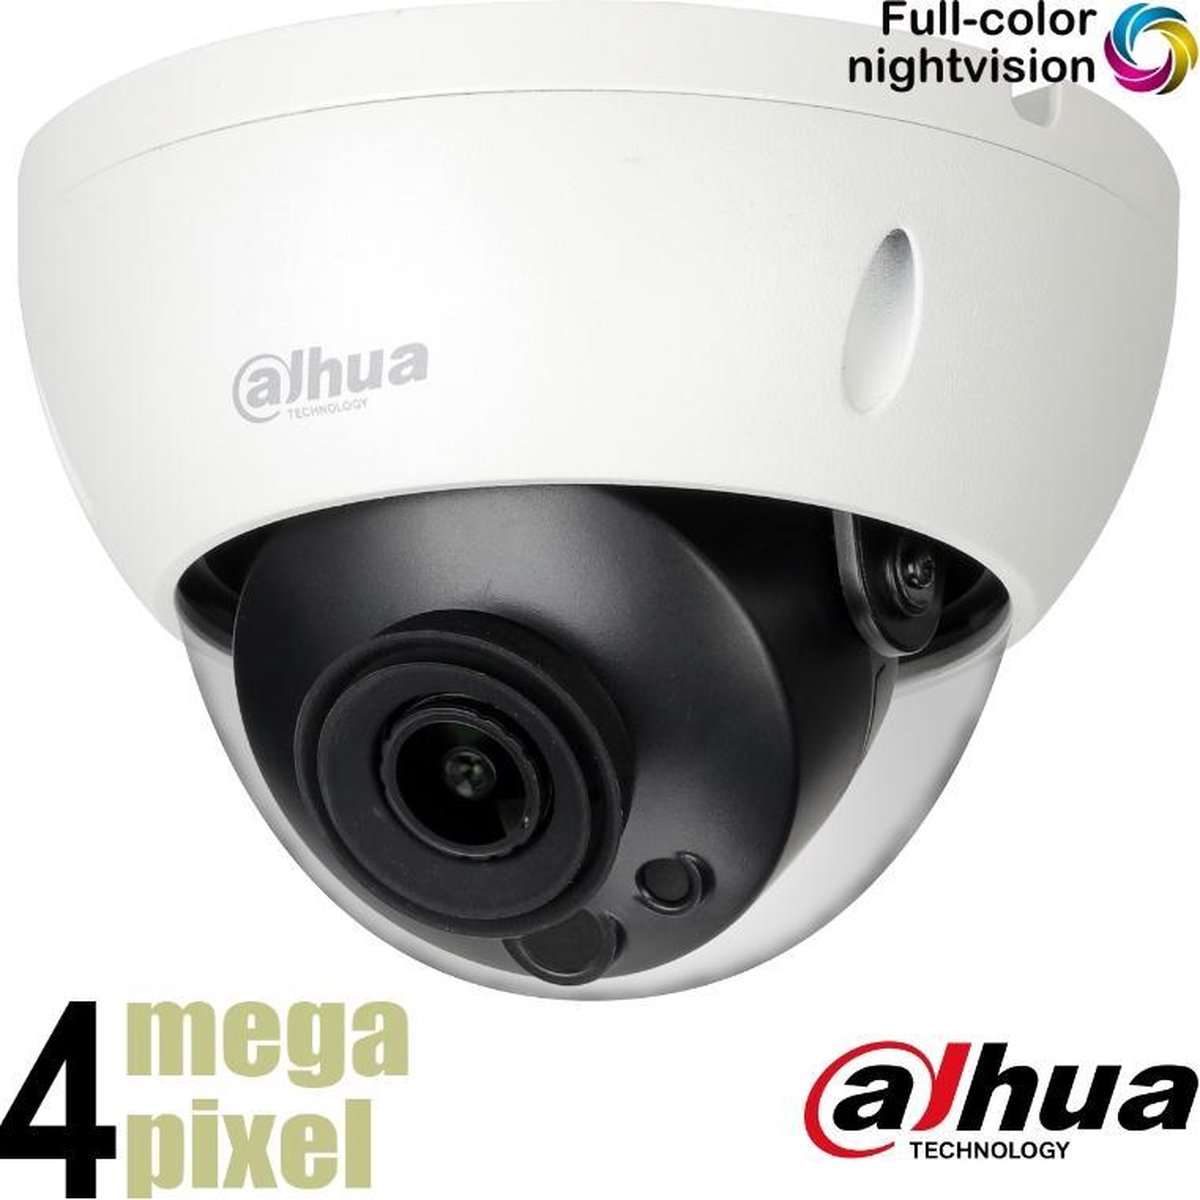 Dahua IPC-HDBW5442R-ASE Full HD 4MP Pro AI buiten dome camera 3.6mm met IR nachtzicht, SD slot en 140dB WDR - Beveiligingscamera IP camera bewakingscamera camerabewaking veiligheidscamera beveiliging netwerk camera webcam